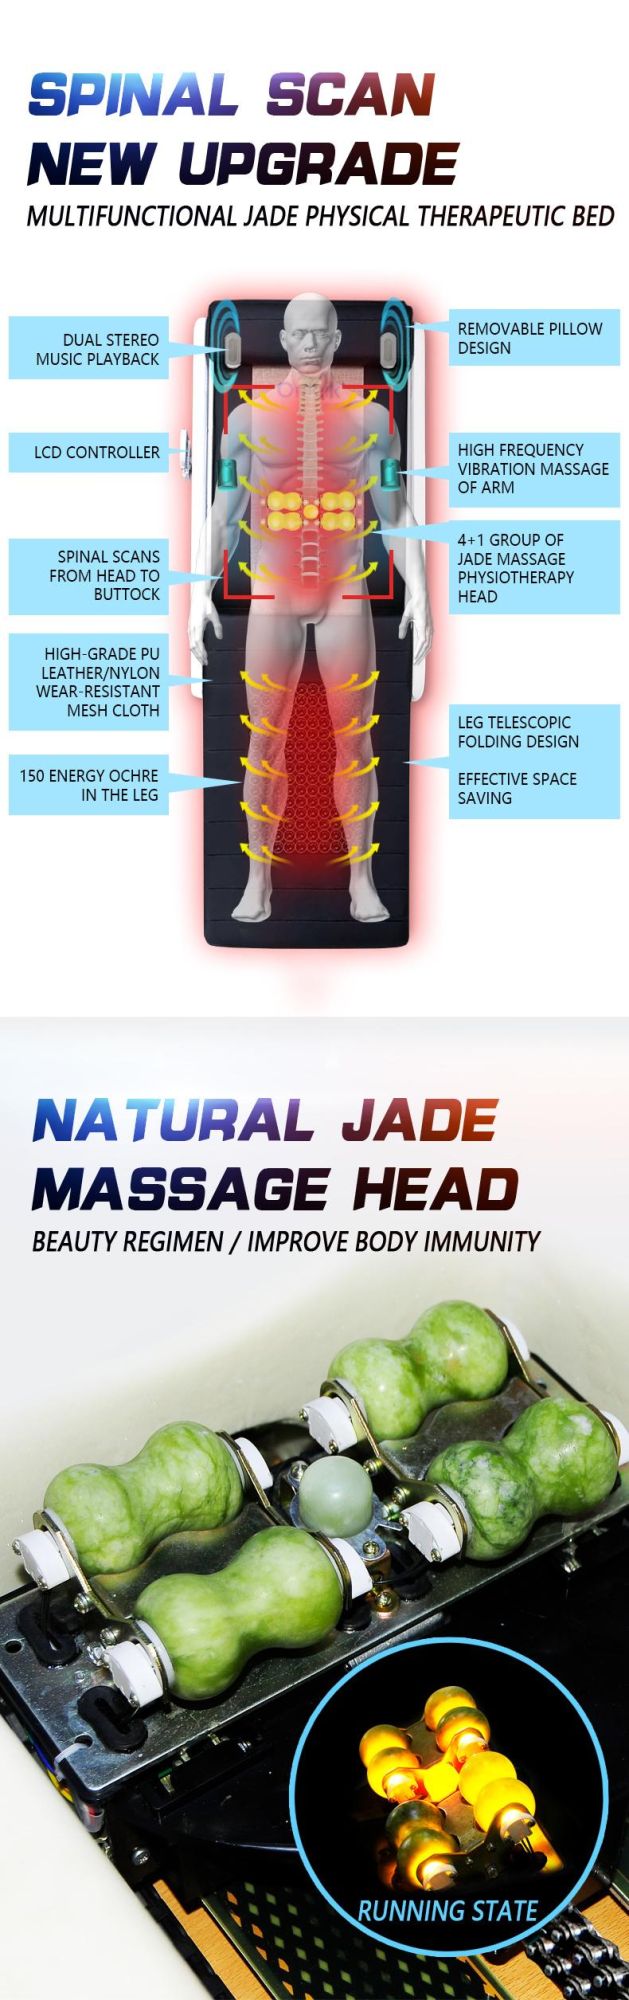 Full Body Jade Message Bed